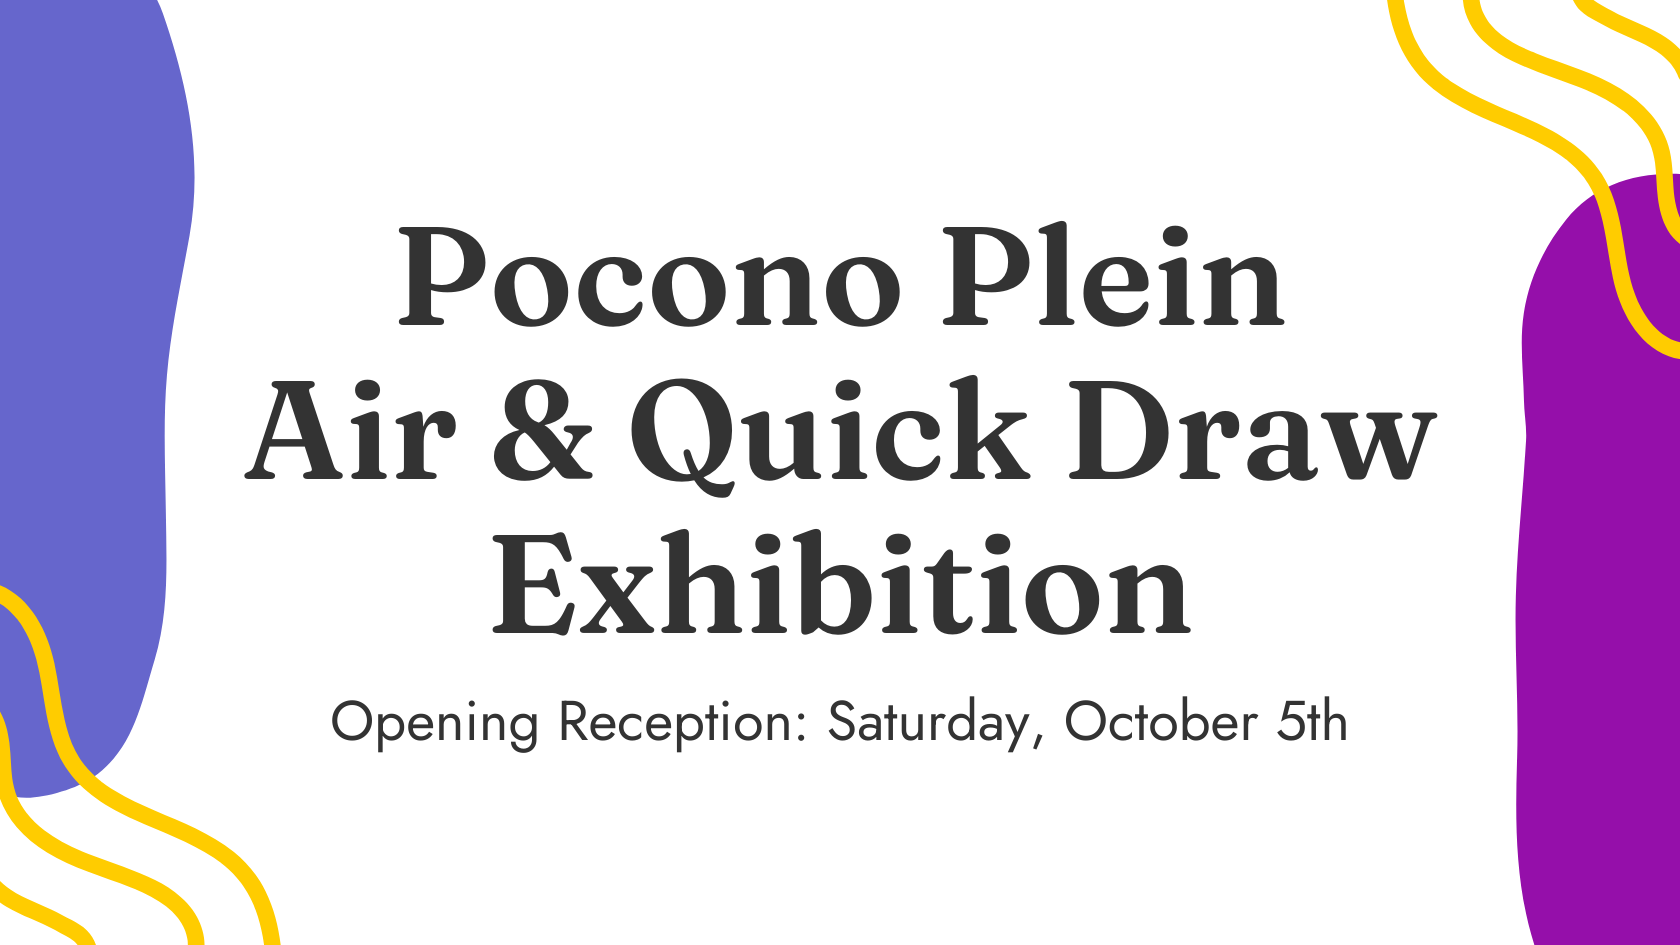 Pocono Plein Air & Quick Draw Exhibition